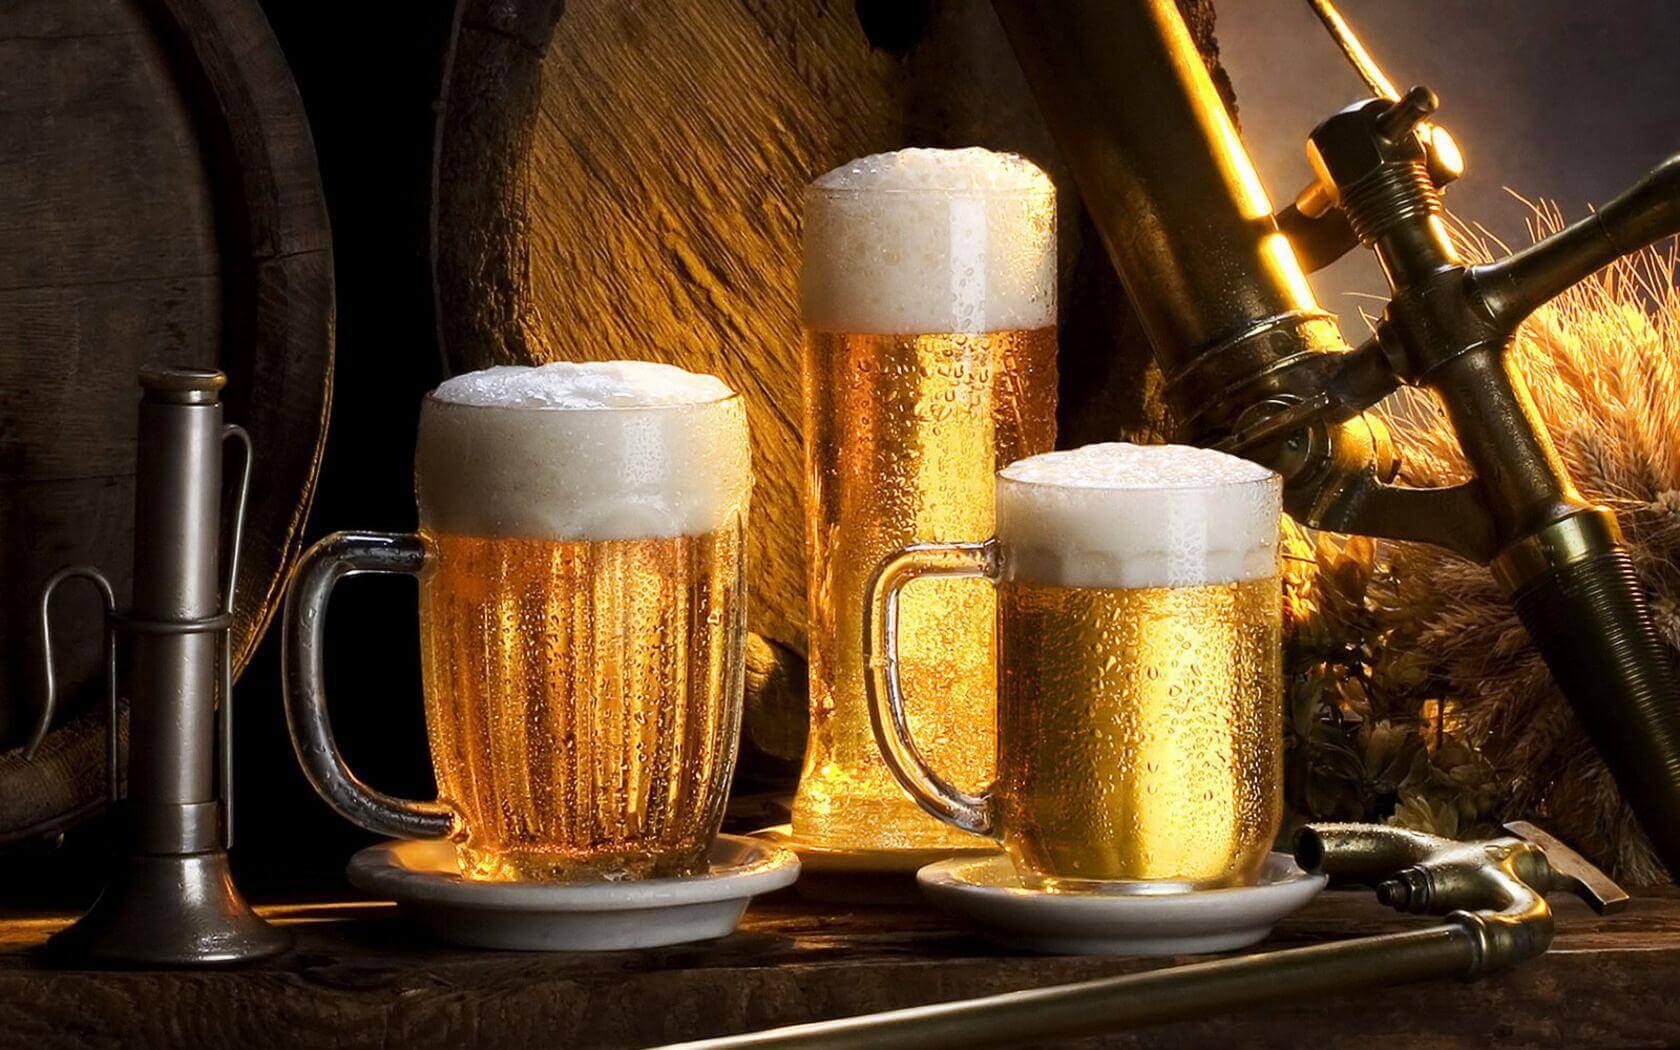 Mirage Park Resort Fıçı Bira 0,33 cl